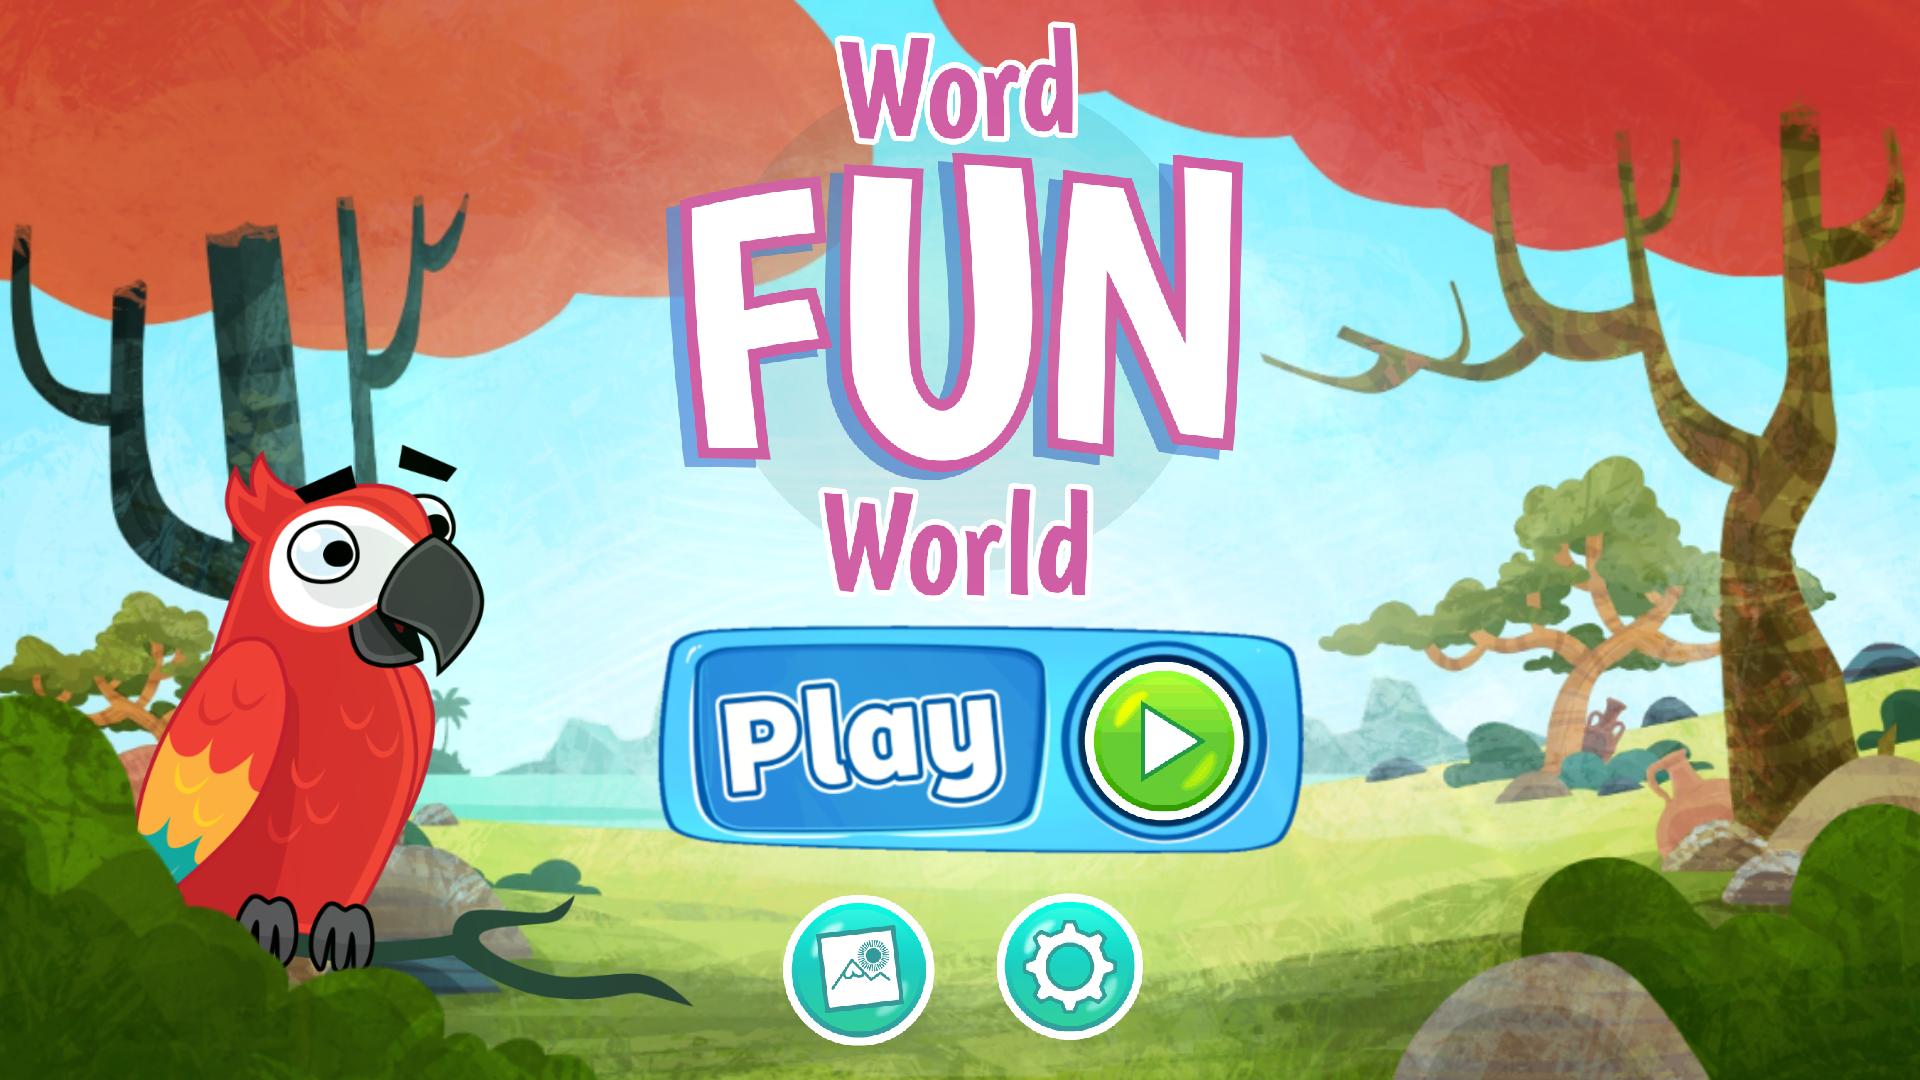 Мир слов 19. Fun World. Игра ворд. Worlds of fun приложение. Мир слов игра.